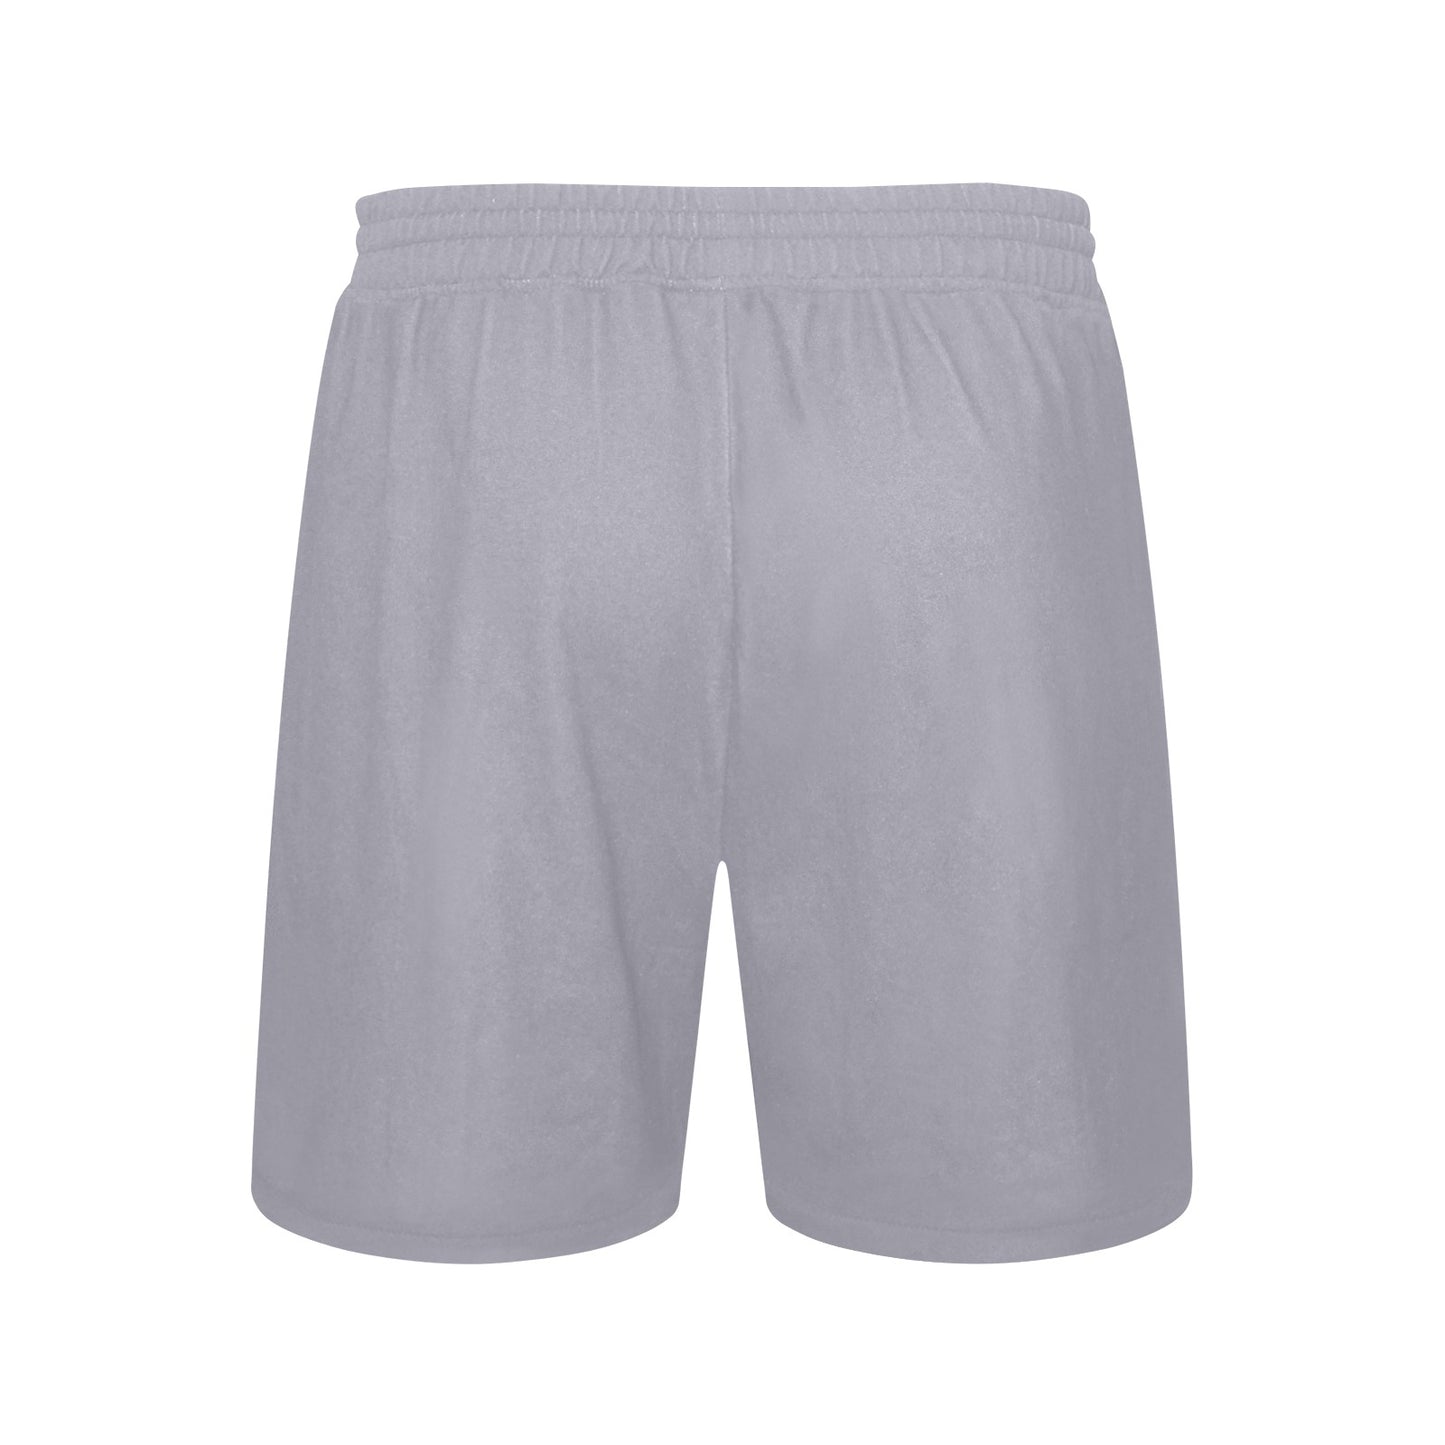 Duntalk "Streetball" Mid-Length Shorts Grey